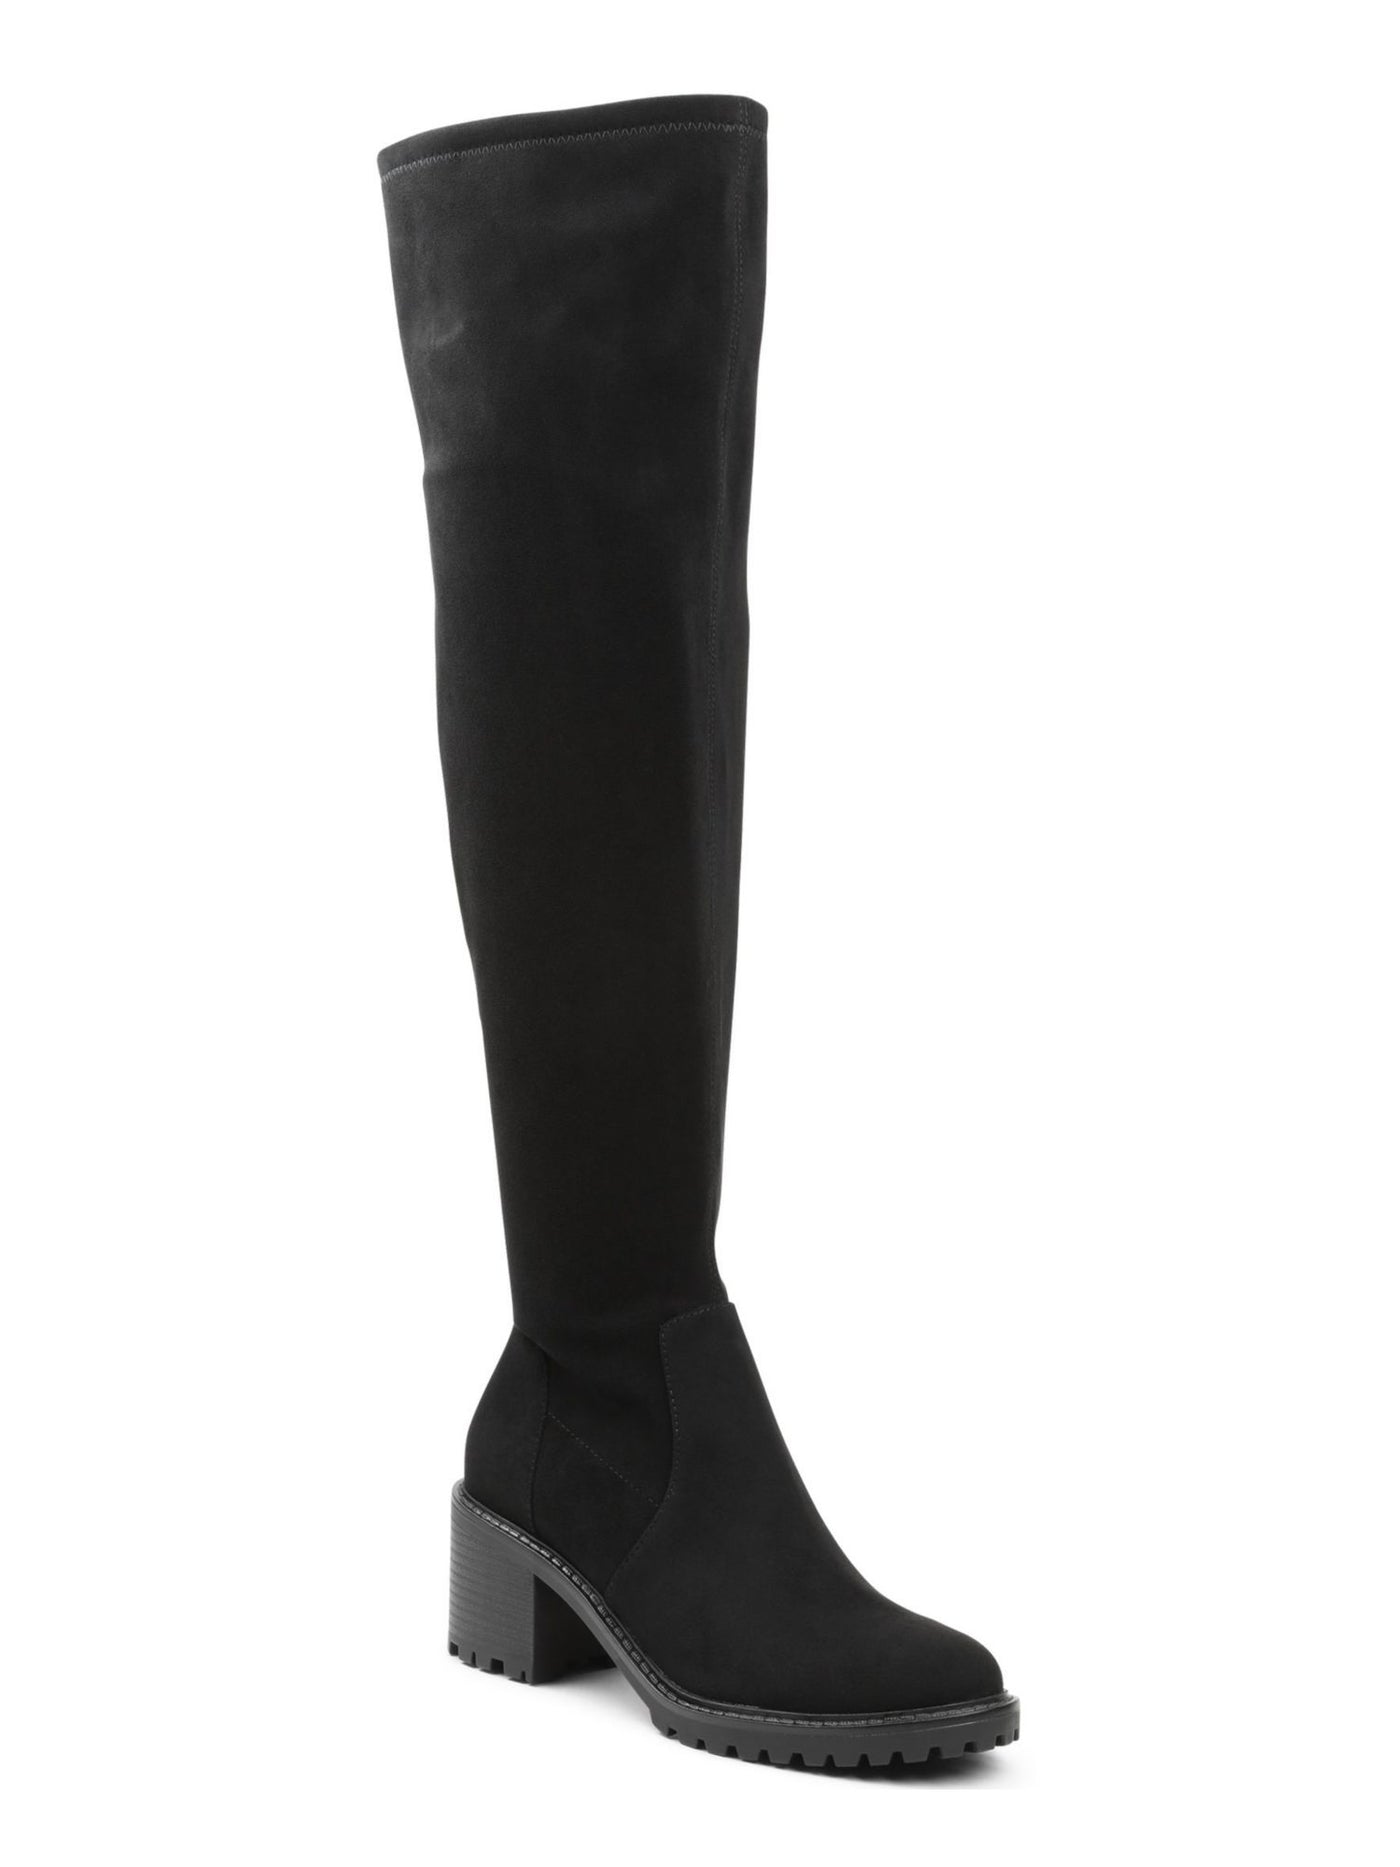 XOXO Womens Black Stretch Lug Sole Rainelle Round Toe Block Heel Zip-Up Heeled Boots 6.5 M